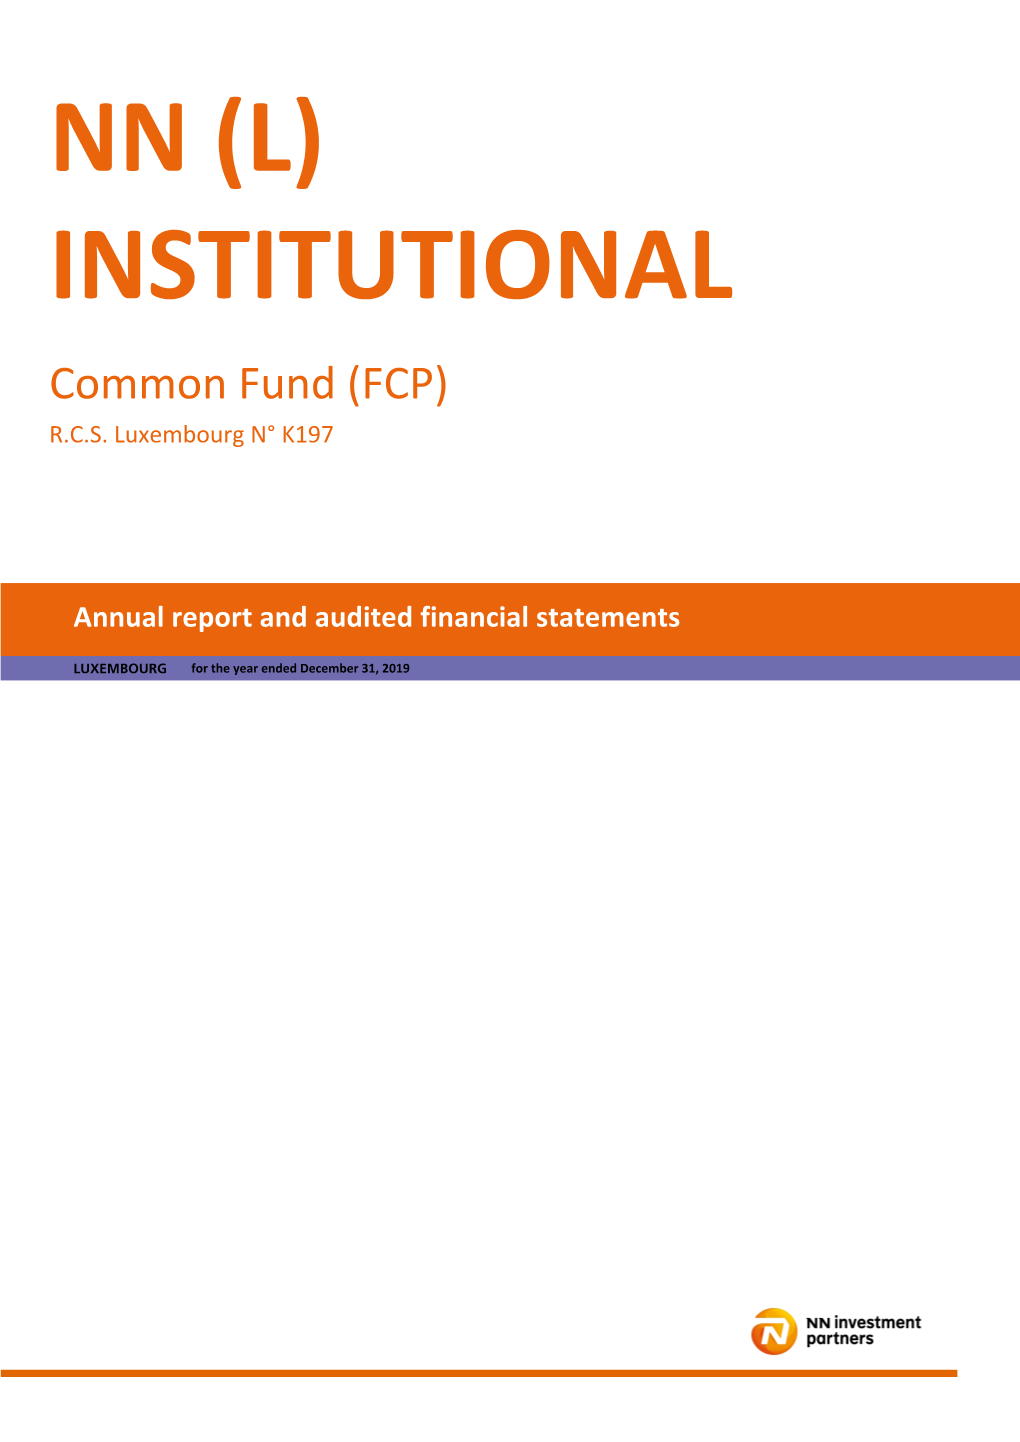 (L) INSTITUTIONAL Common Fund (FCP) R.C.S